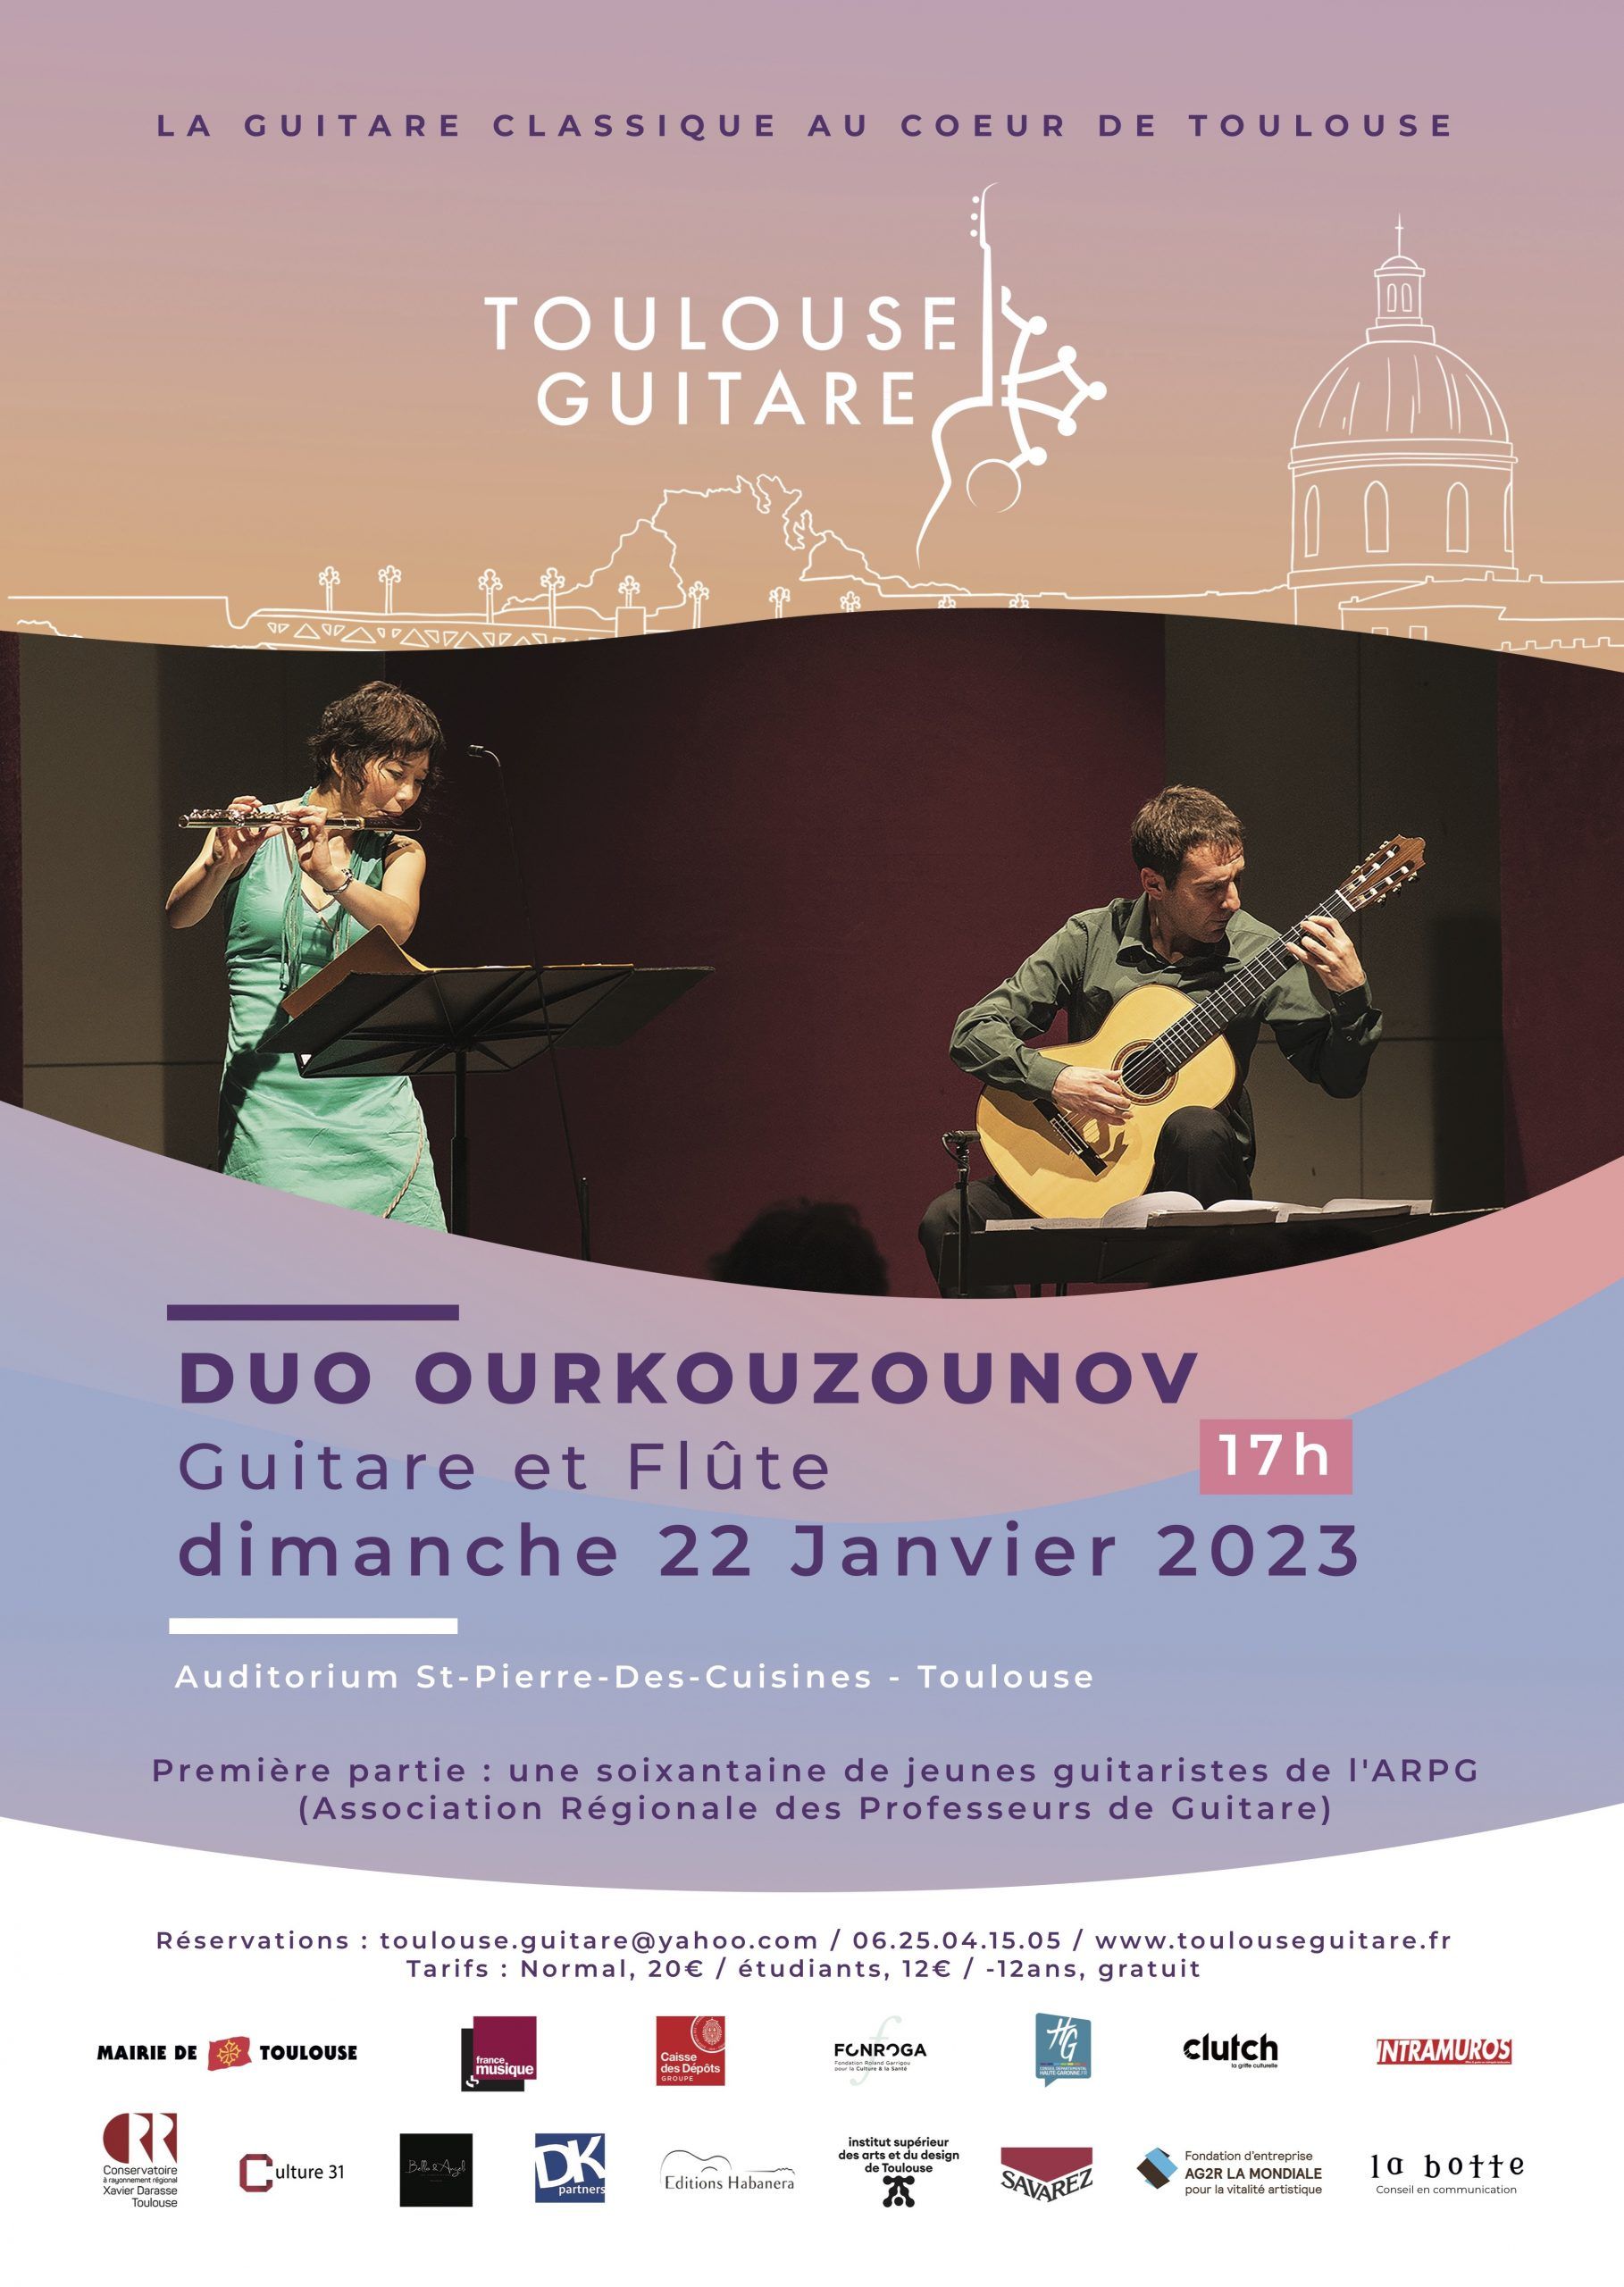 Toulouse Guitare - Duo Ourkouzounov